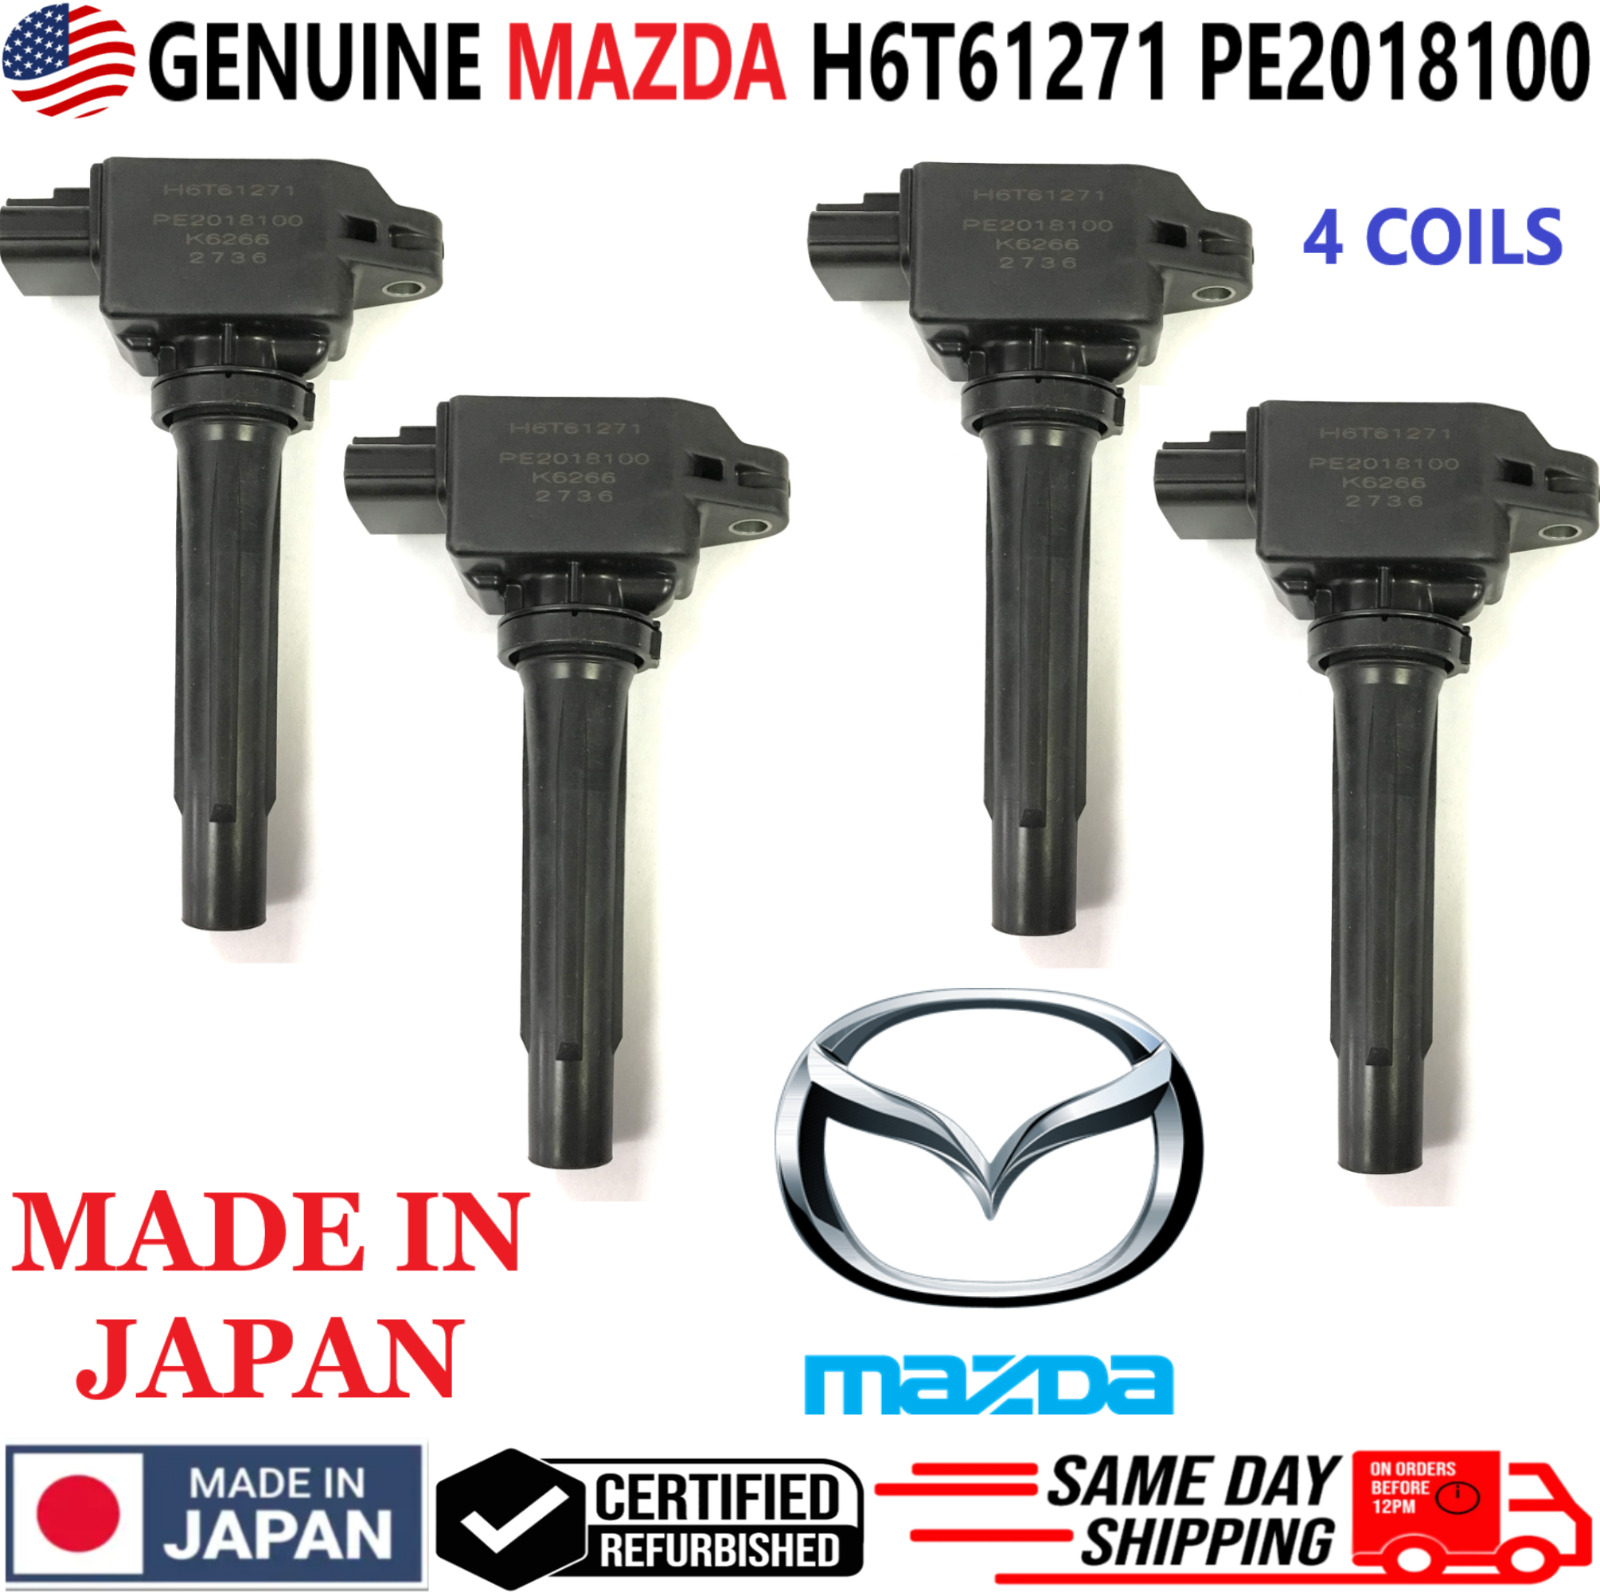 GENUINE MAZDA x4 Ignition Coils For 2012-2019 Mazda 3 6 CX-3 5 9 MX-5, H6T61271